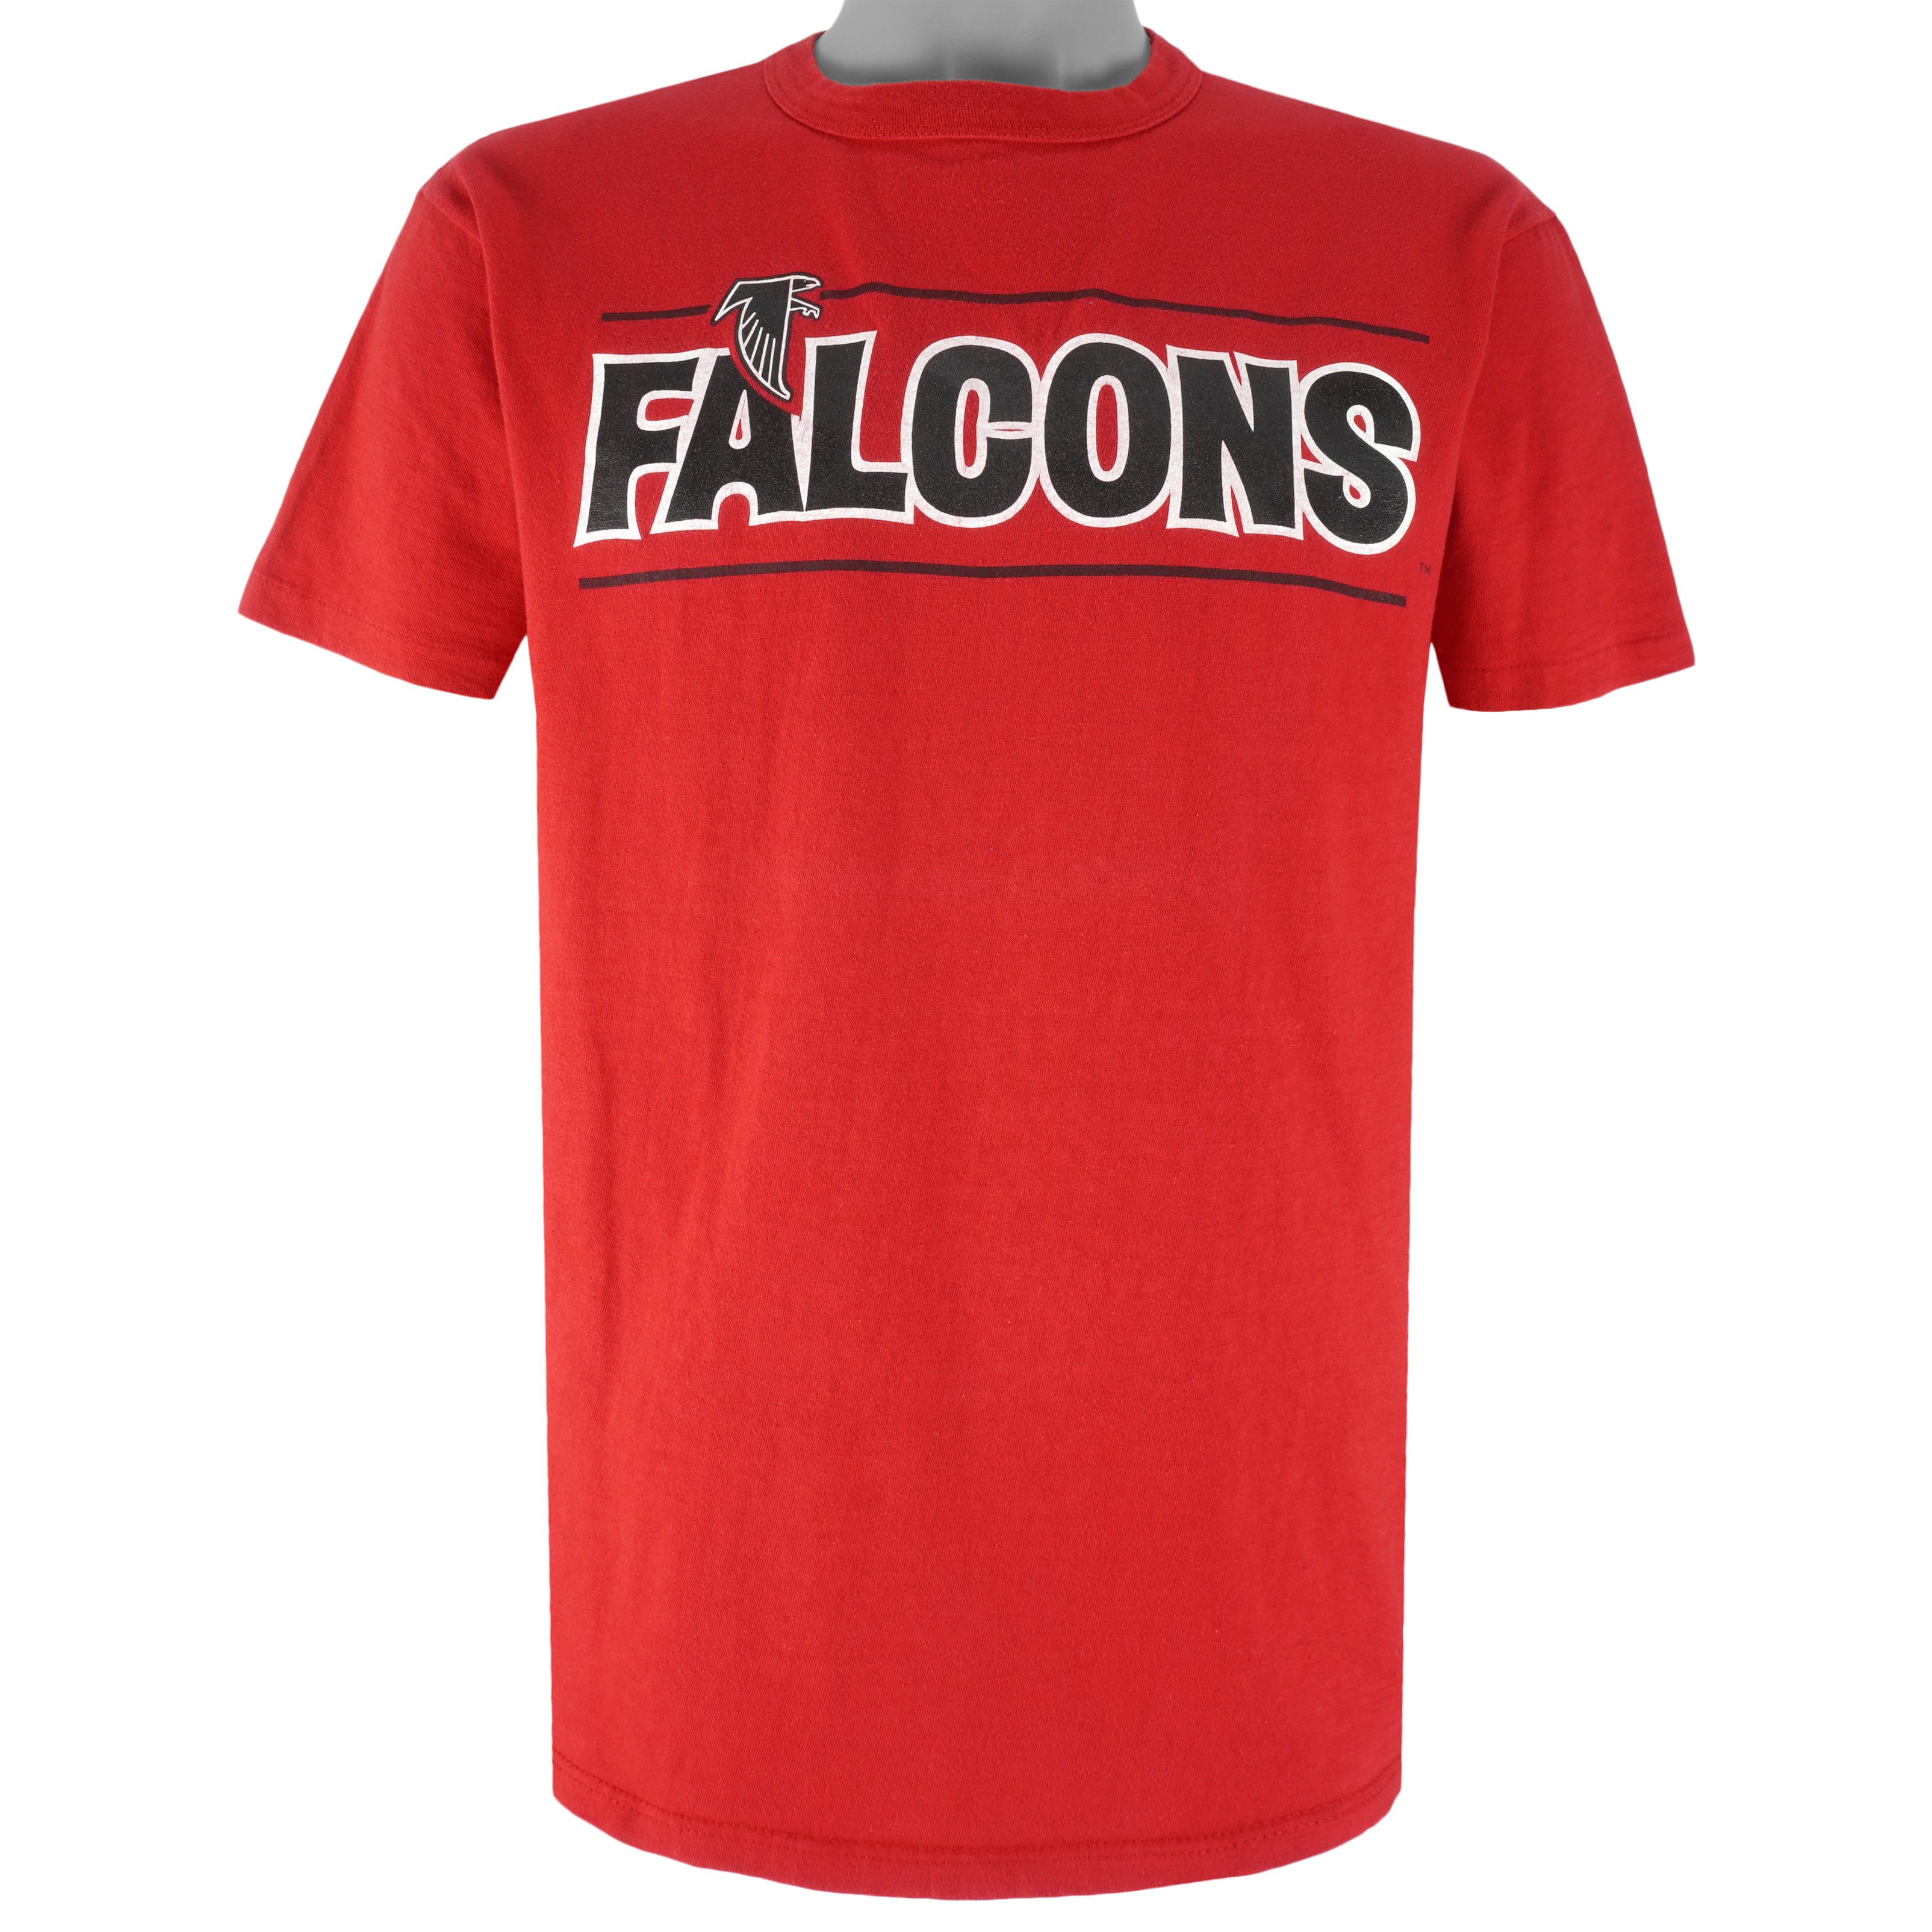 falcons fubu jersey